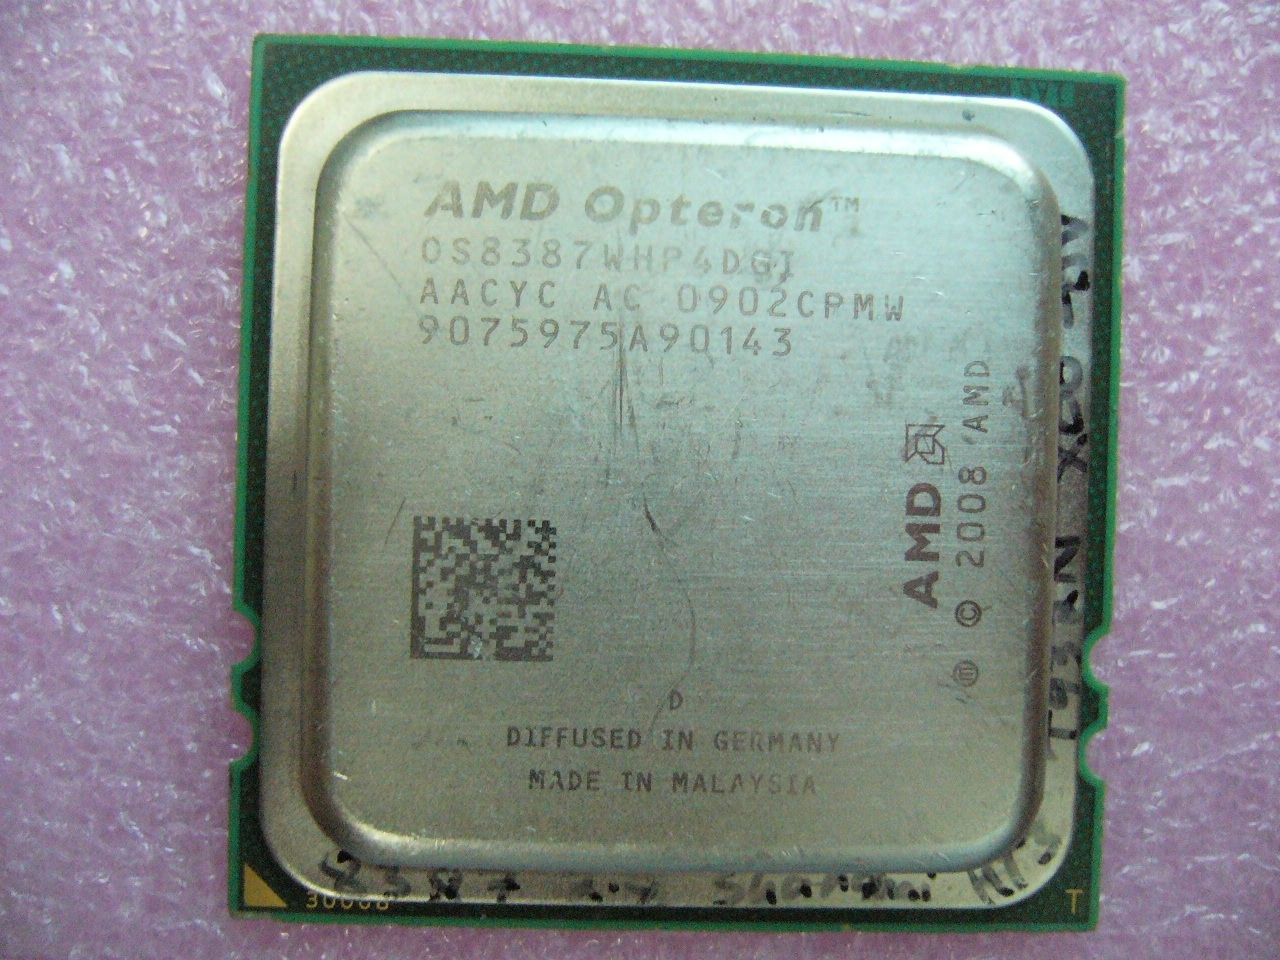 QTY 1x AMD Opteron 8387 2.8 GHz Quad-Core (OS8387WHP4DG) CPU Socket F 1207